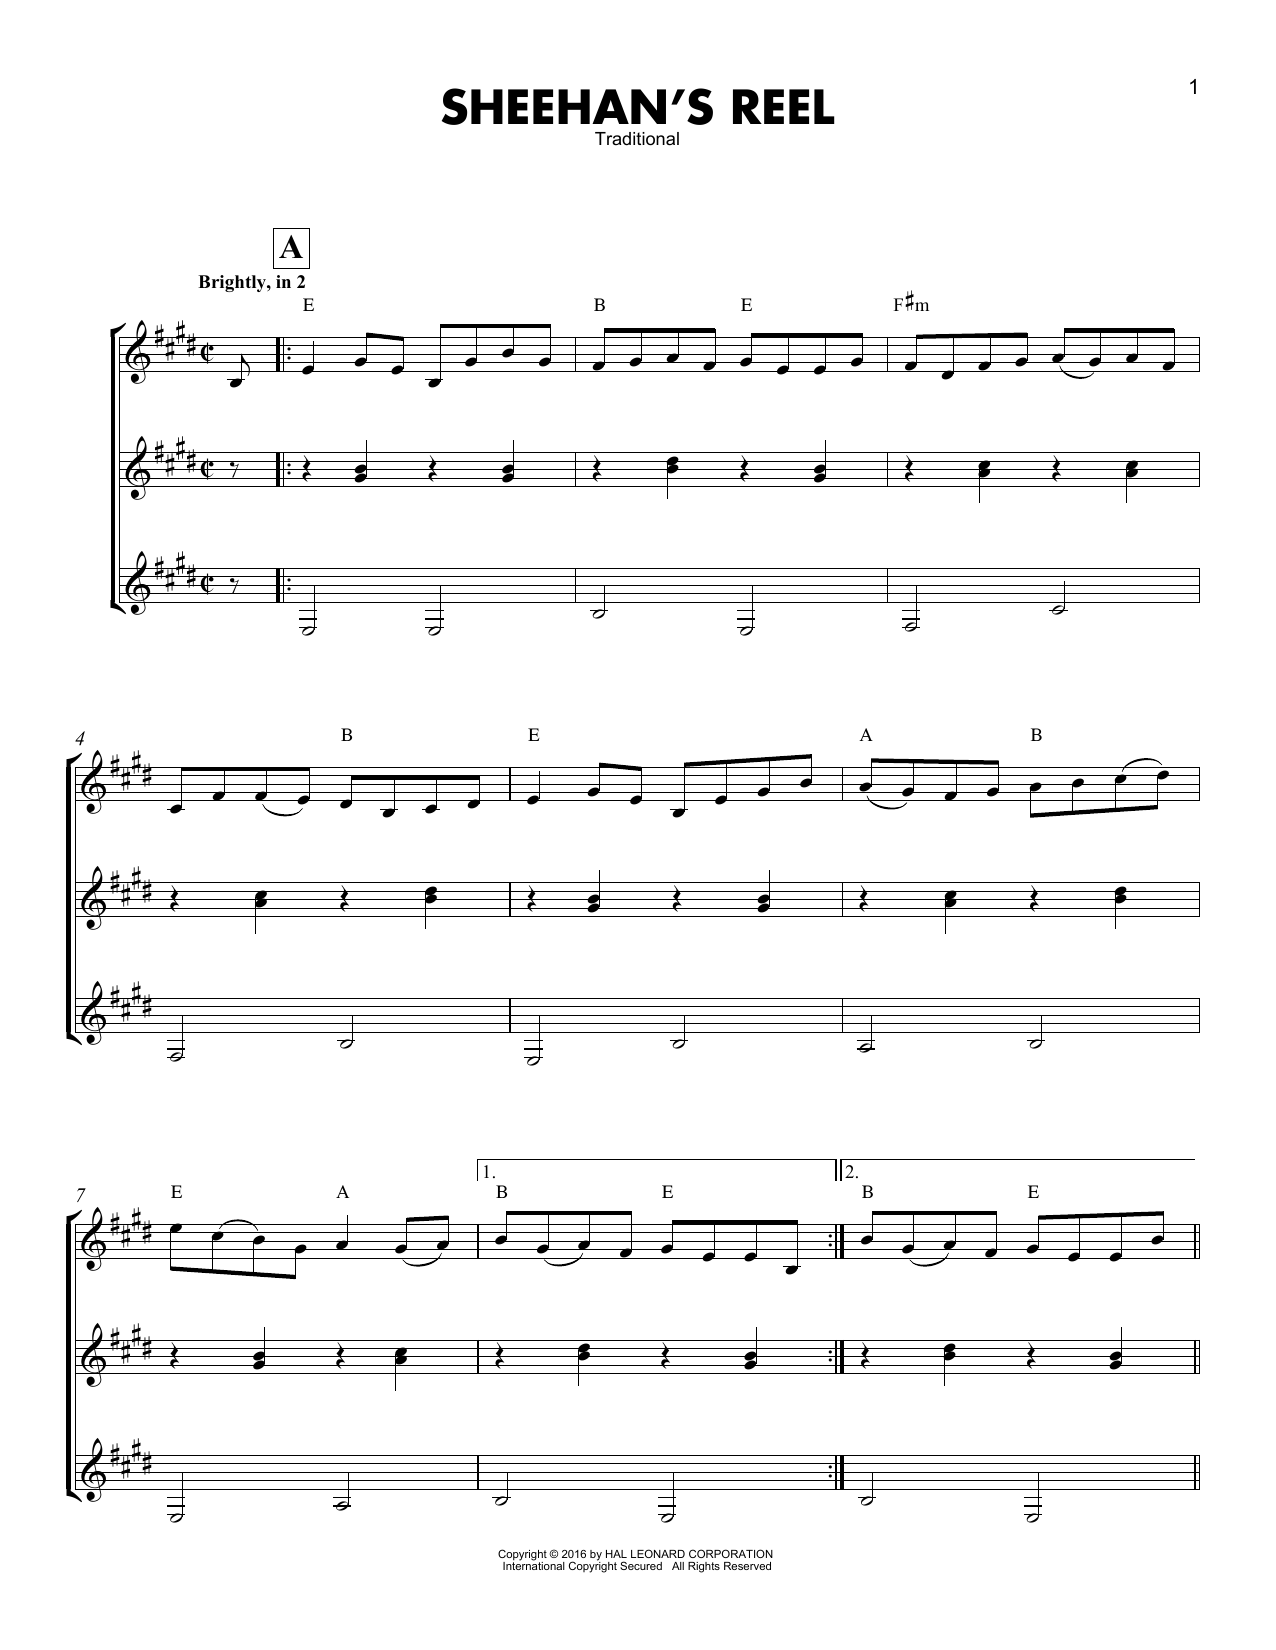 Traditional Sheehan's Reel Sheet Music Notes & Chords for Guitar Ensemble - Download or Print PDF